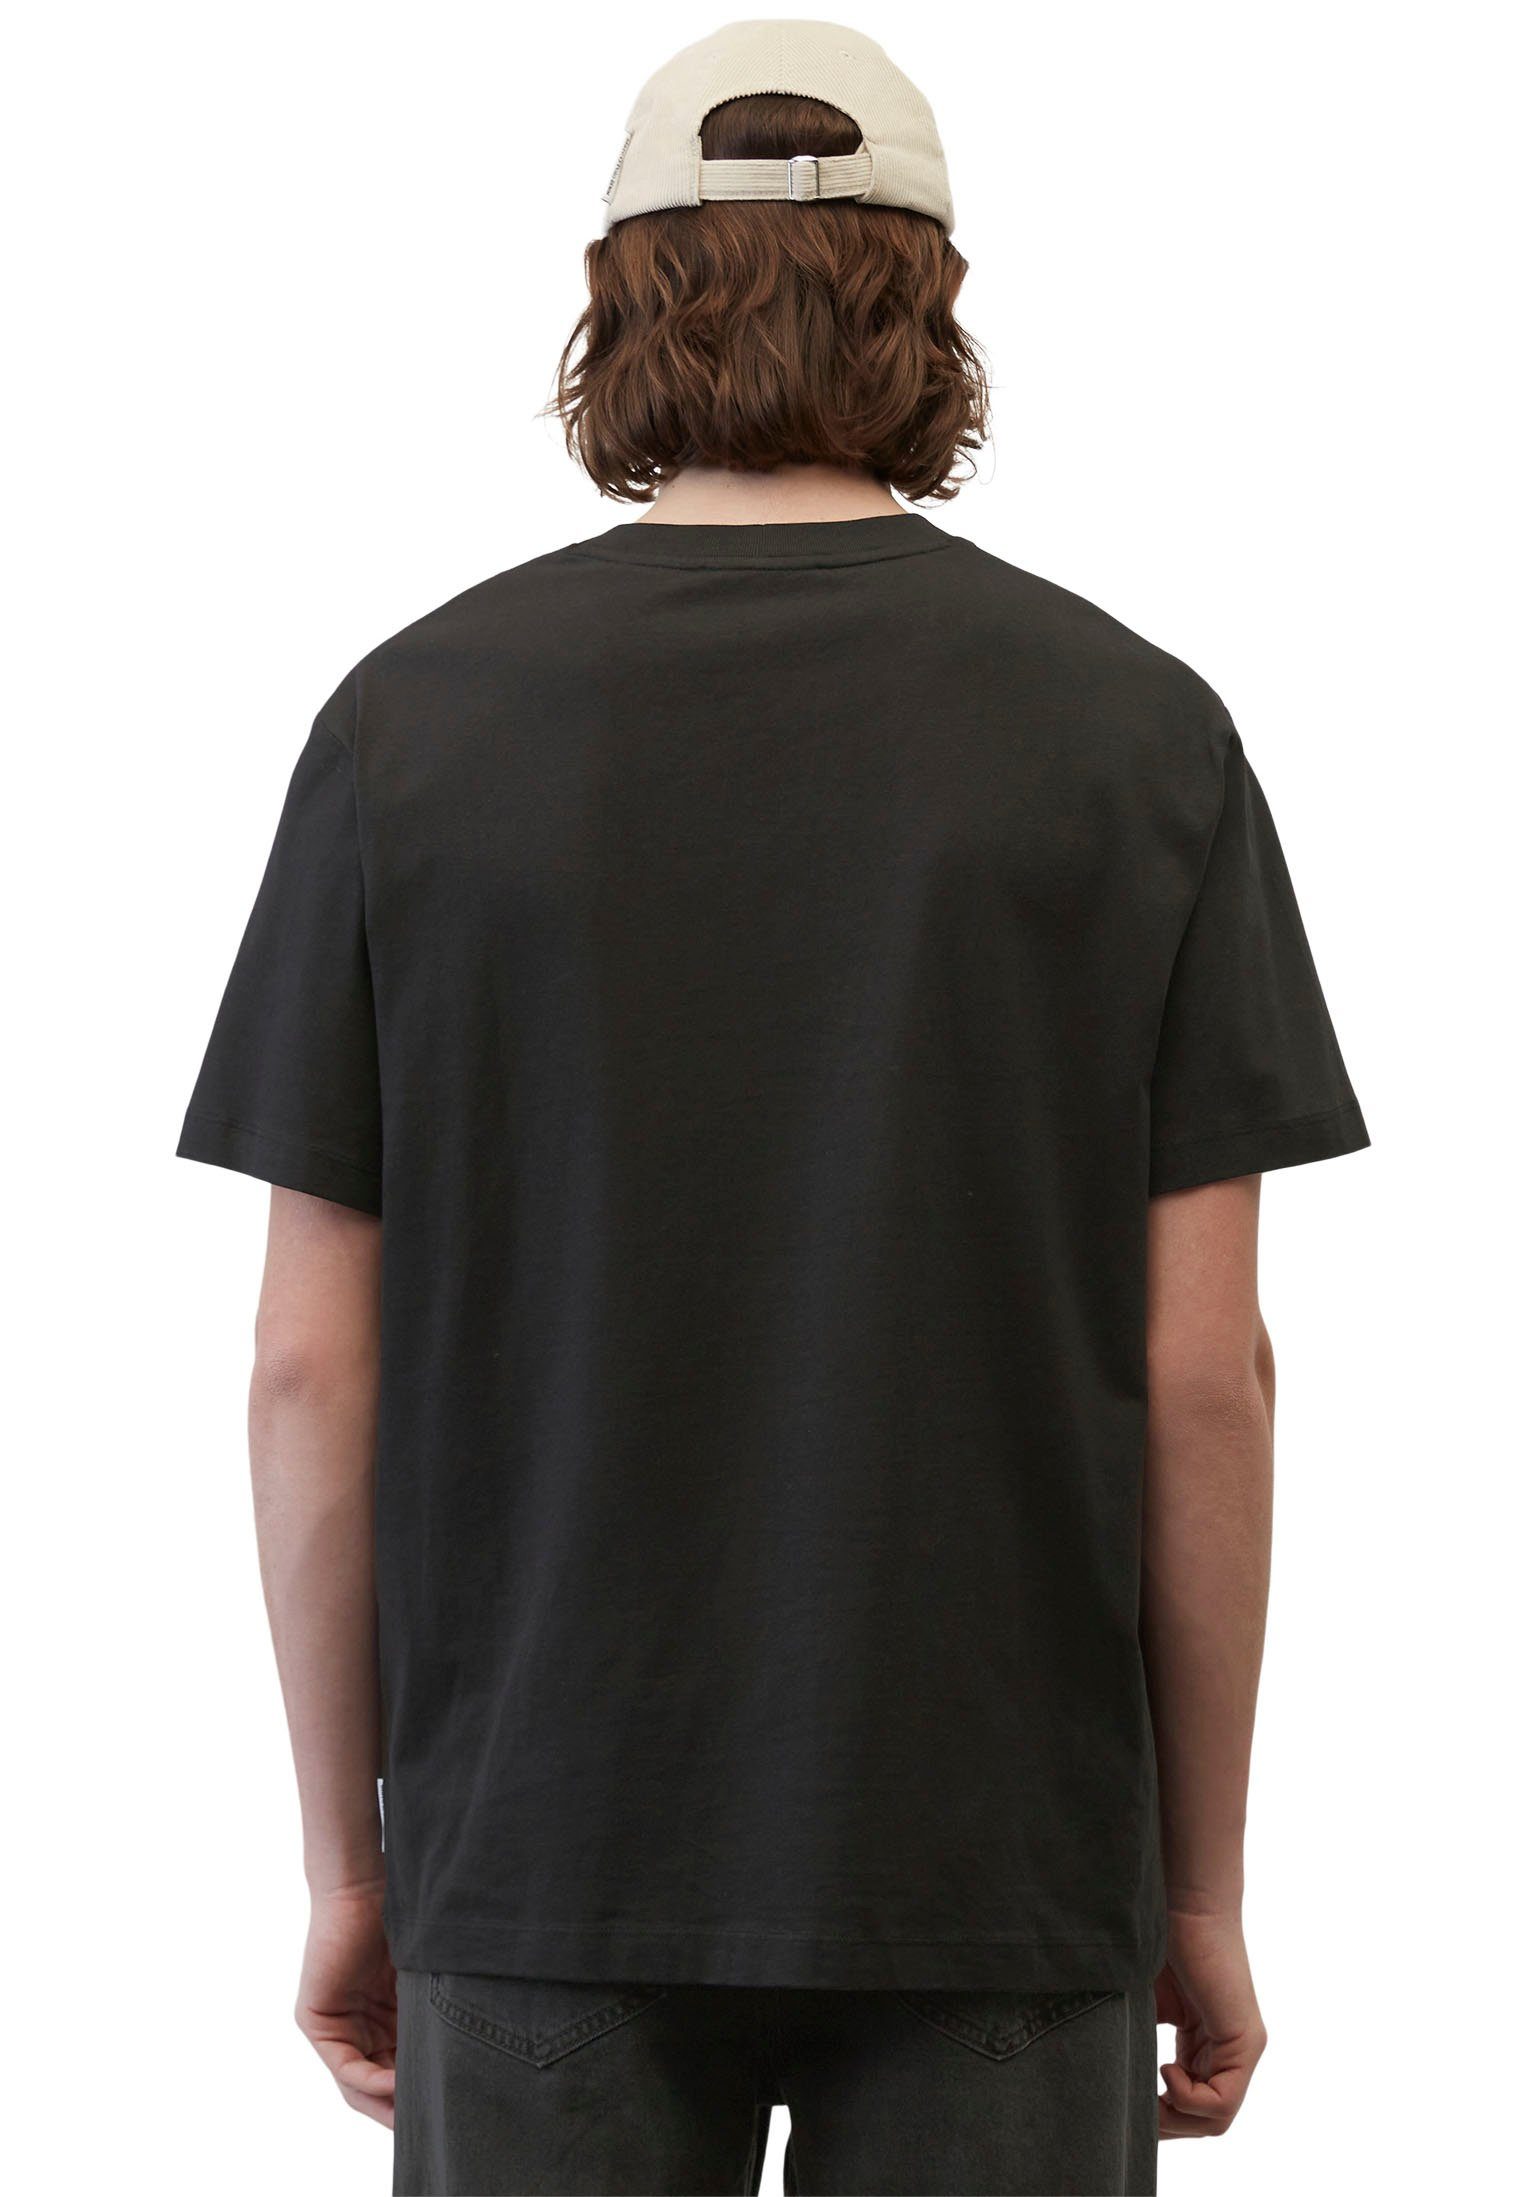 vorne mit T-Shirt DENIM schwarz Labeling Marc O'Polo mittig